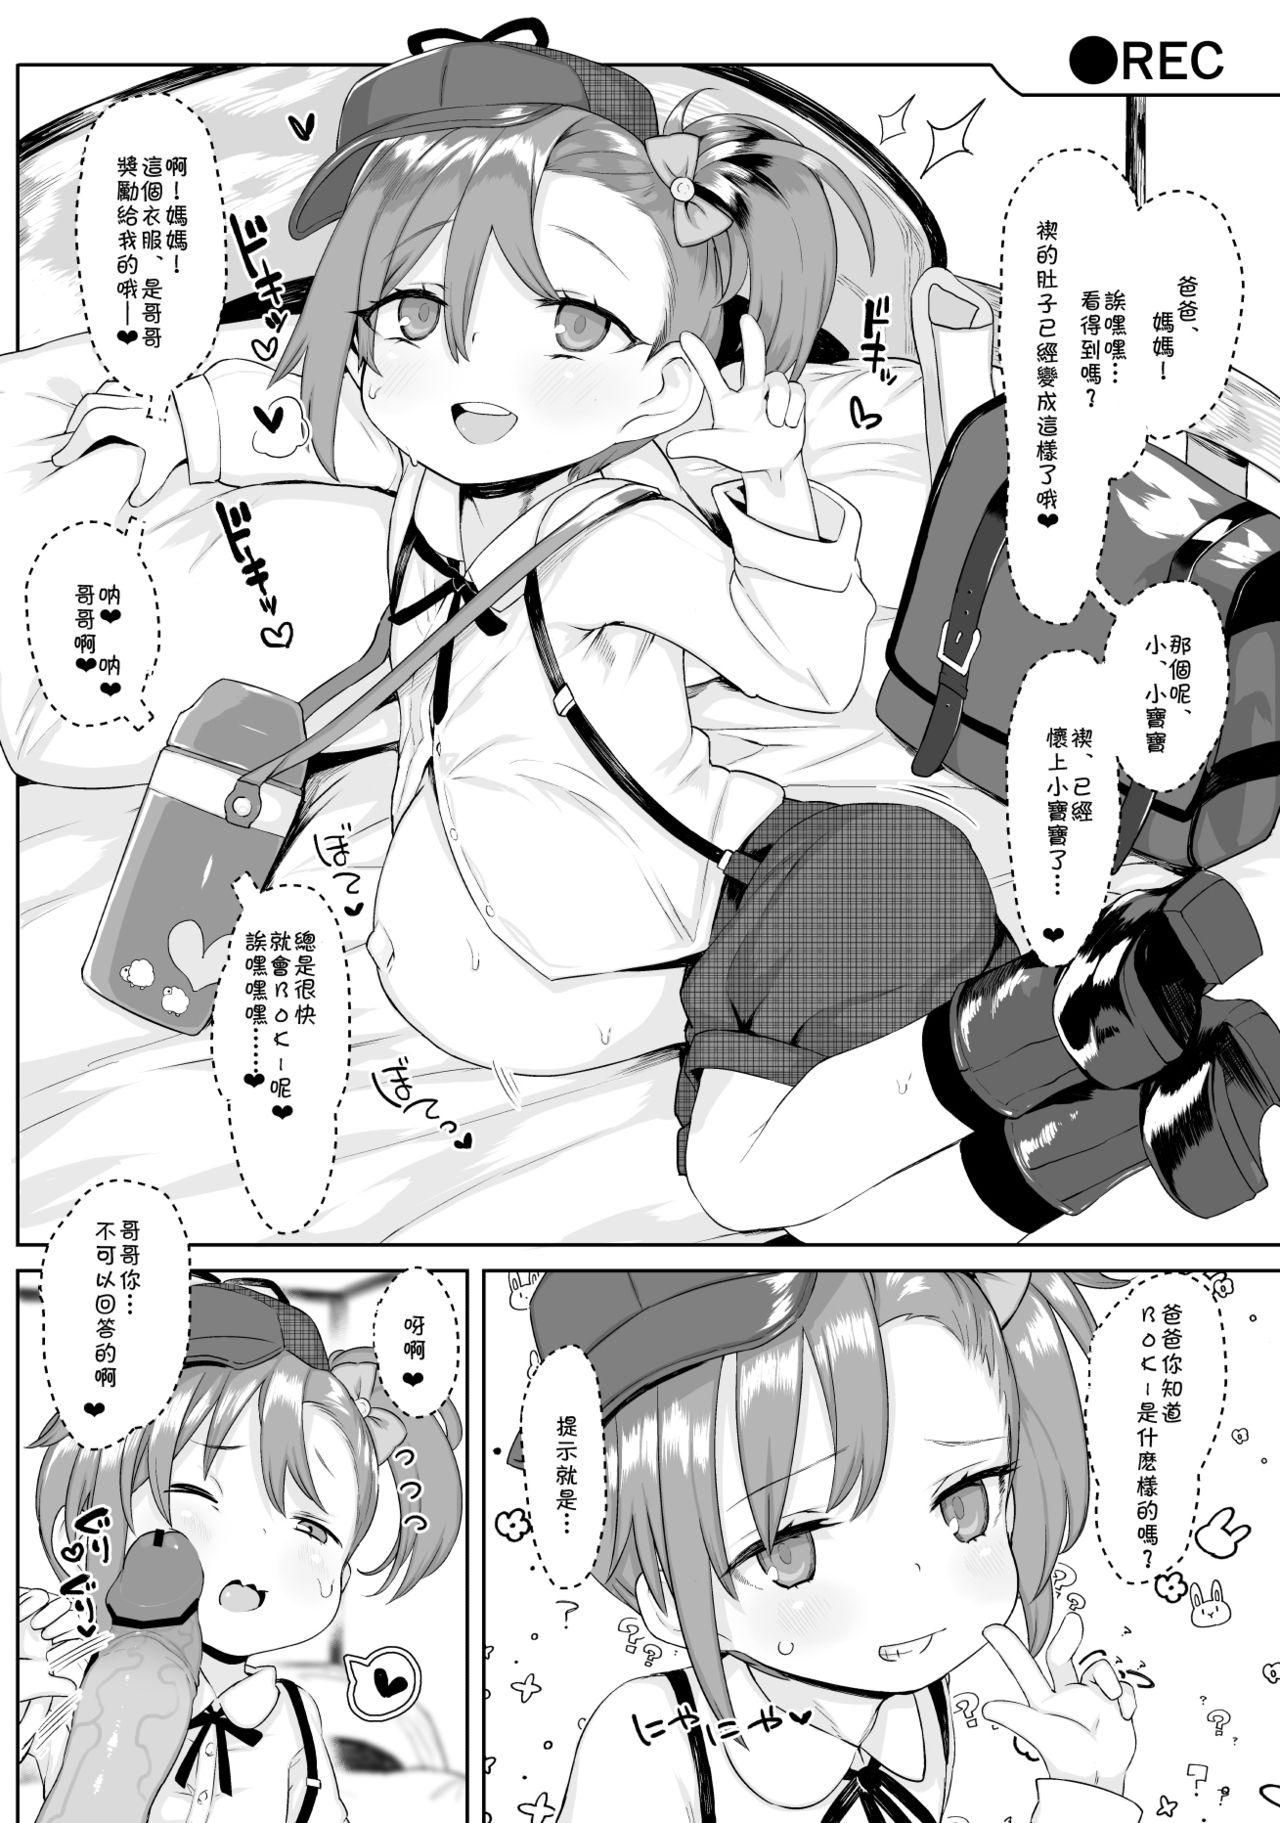 4some Misogi-chan no copy hon - Princess connect Stroking - Page 11